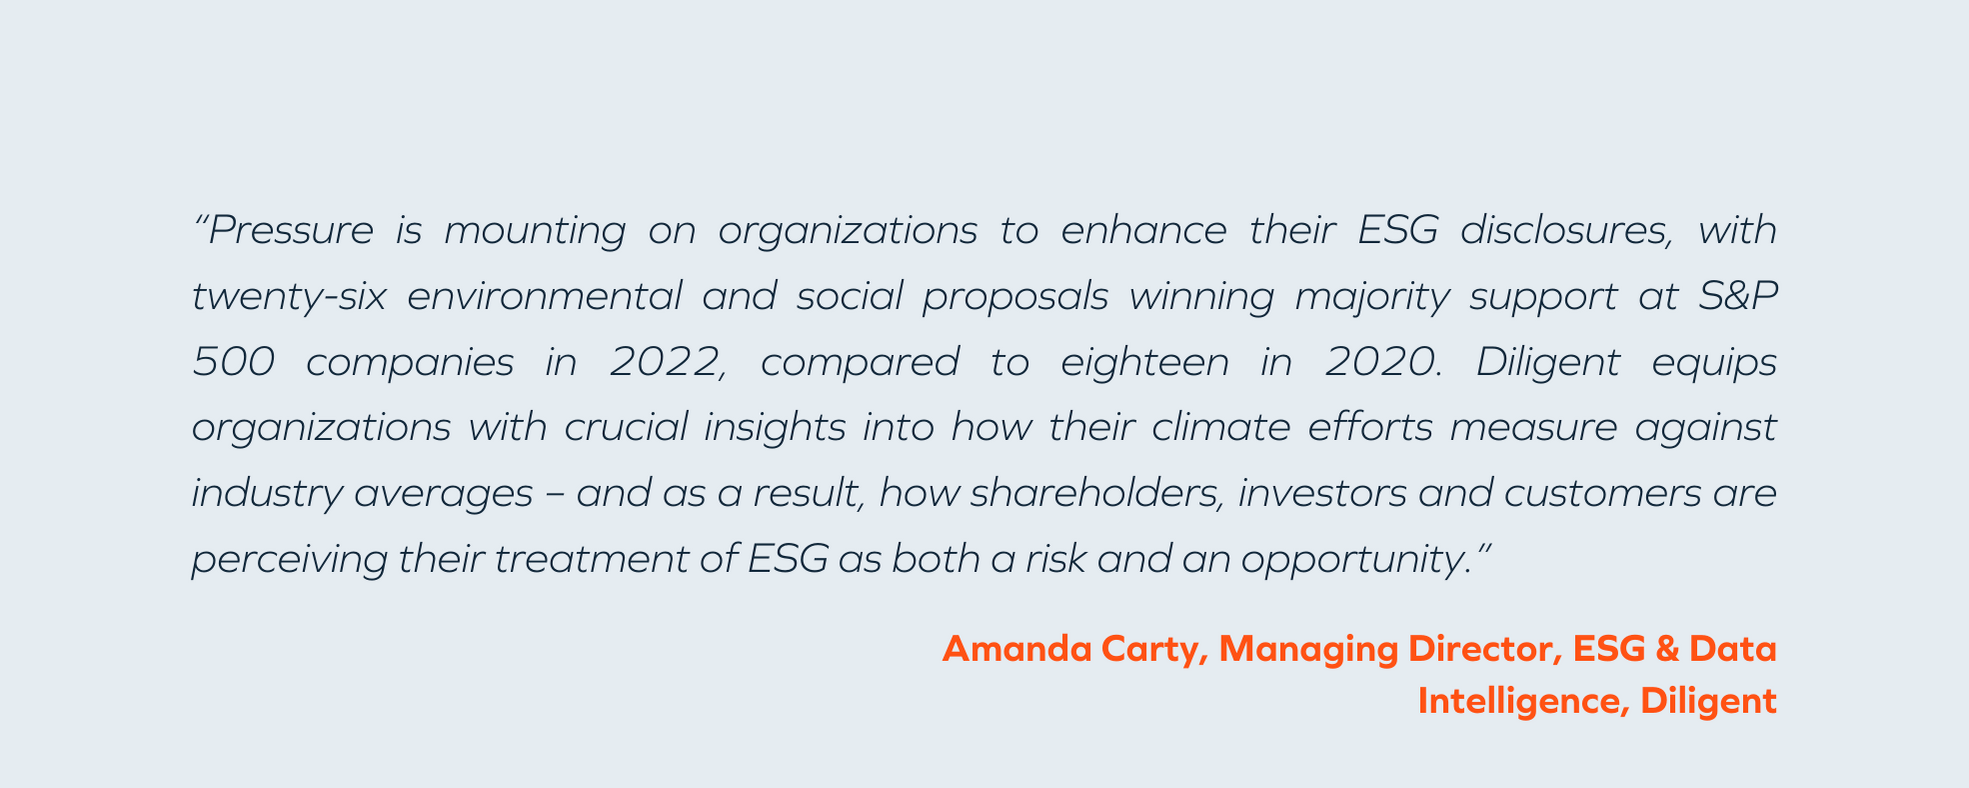 Amanda Carty, Managing Director, ESG & Data Intelligence, Diligent